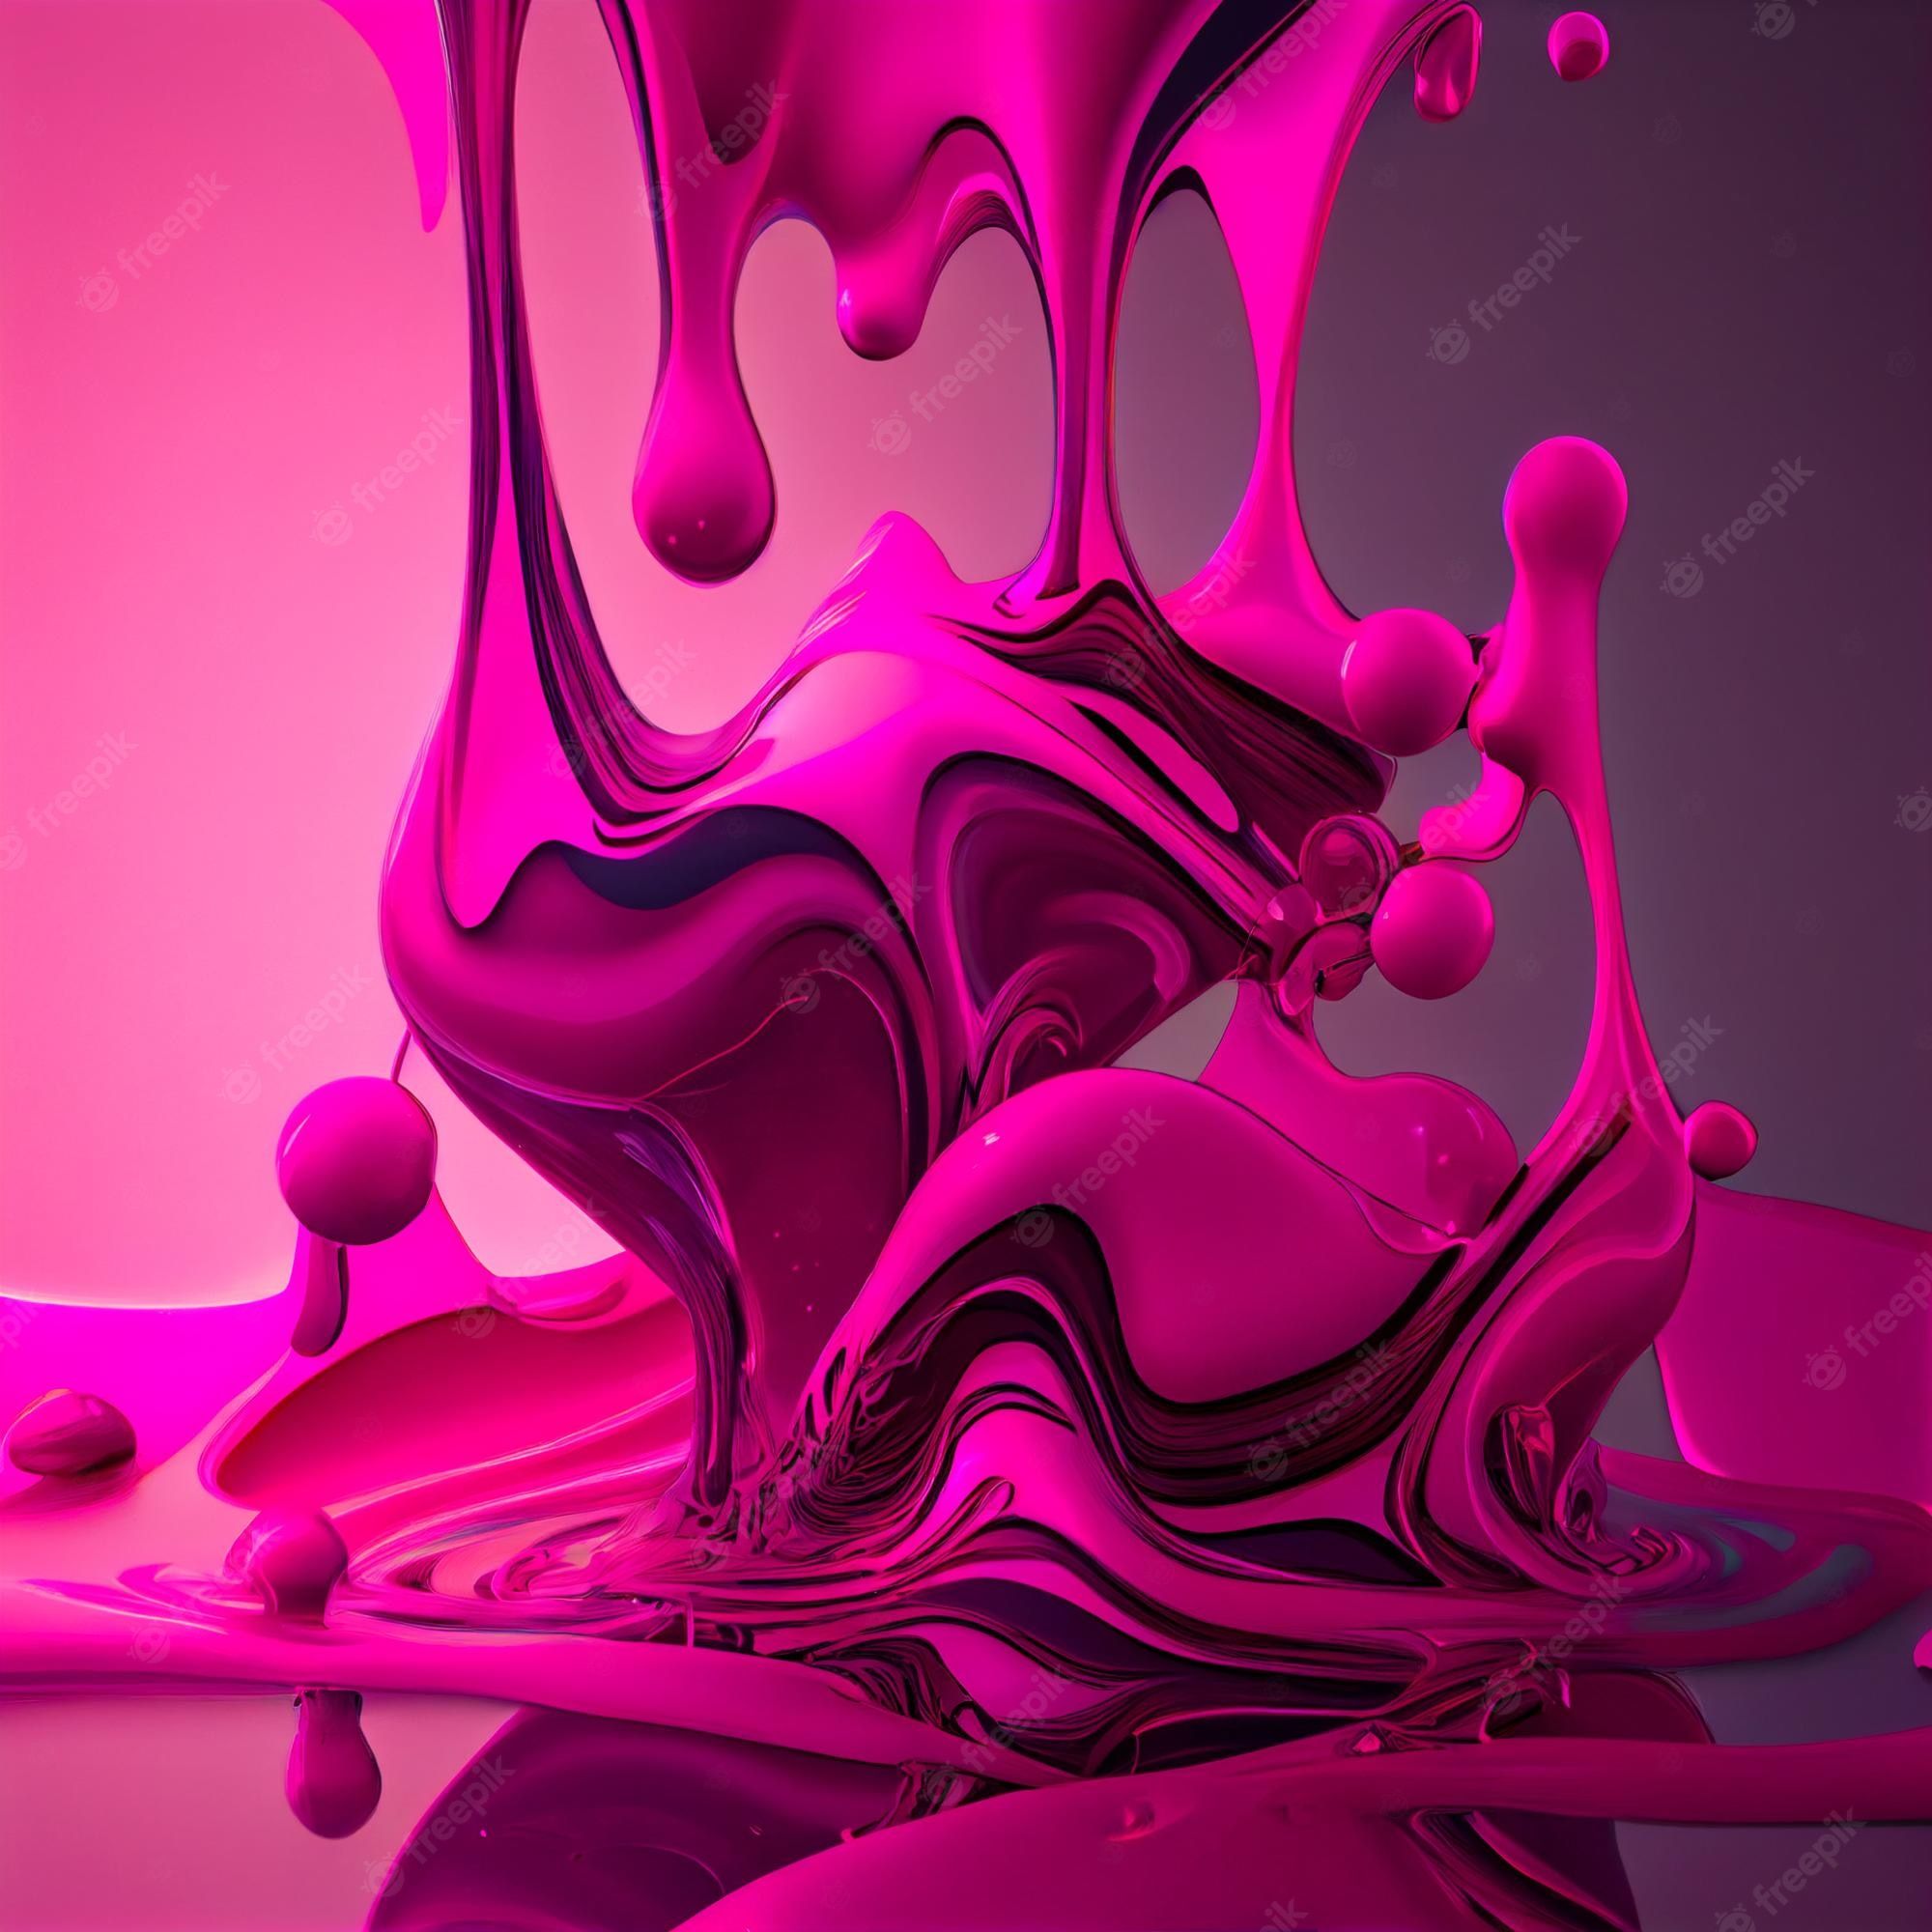 A pink liquid is splashing on the ground - Magenta